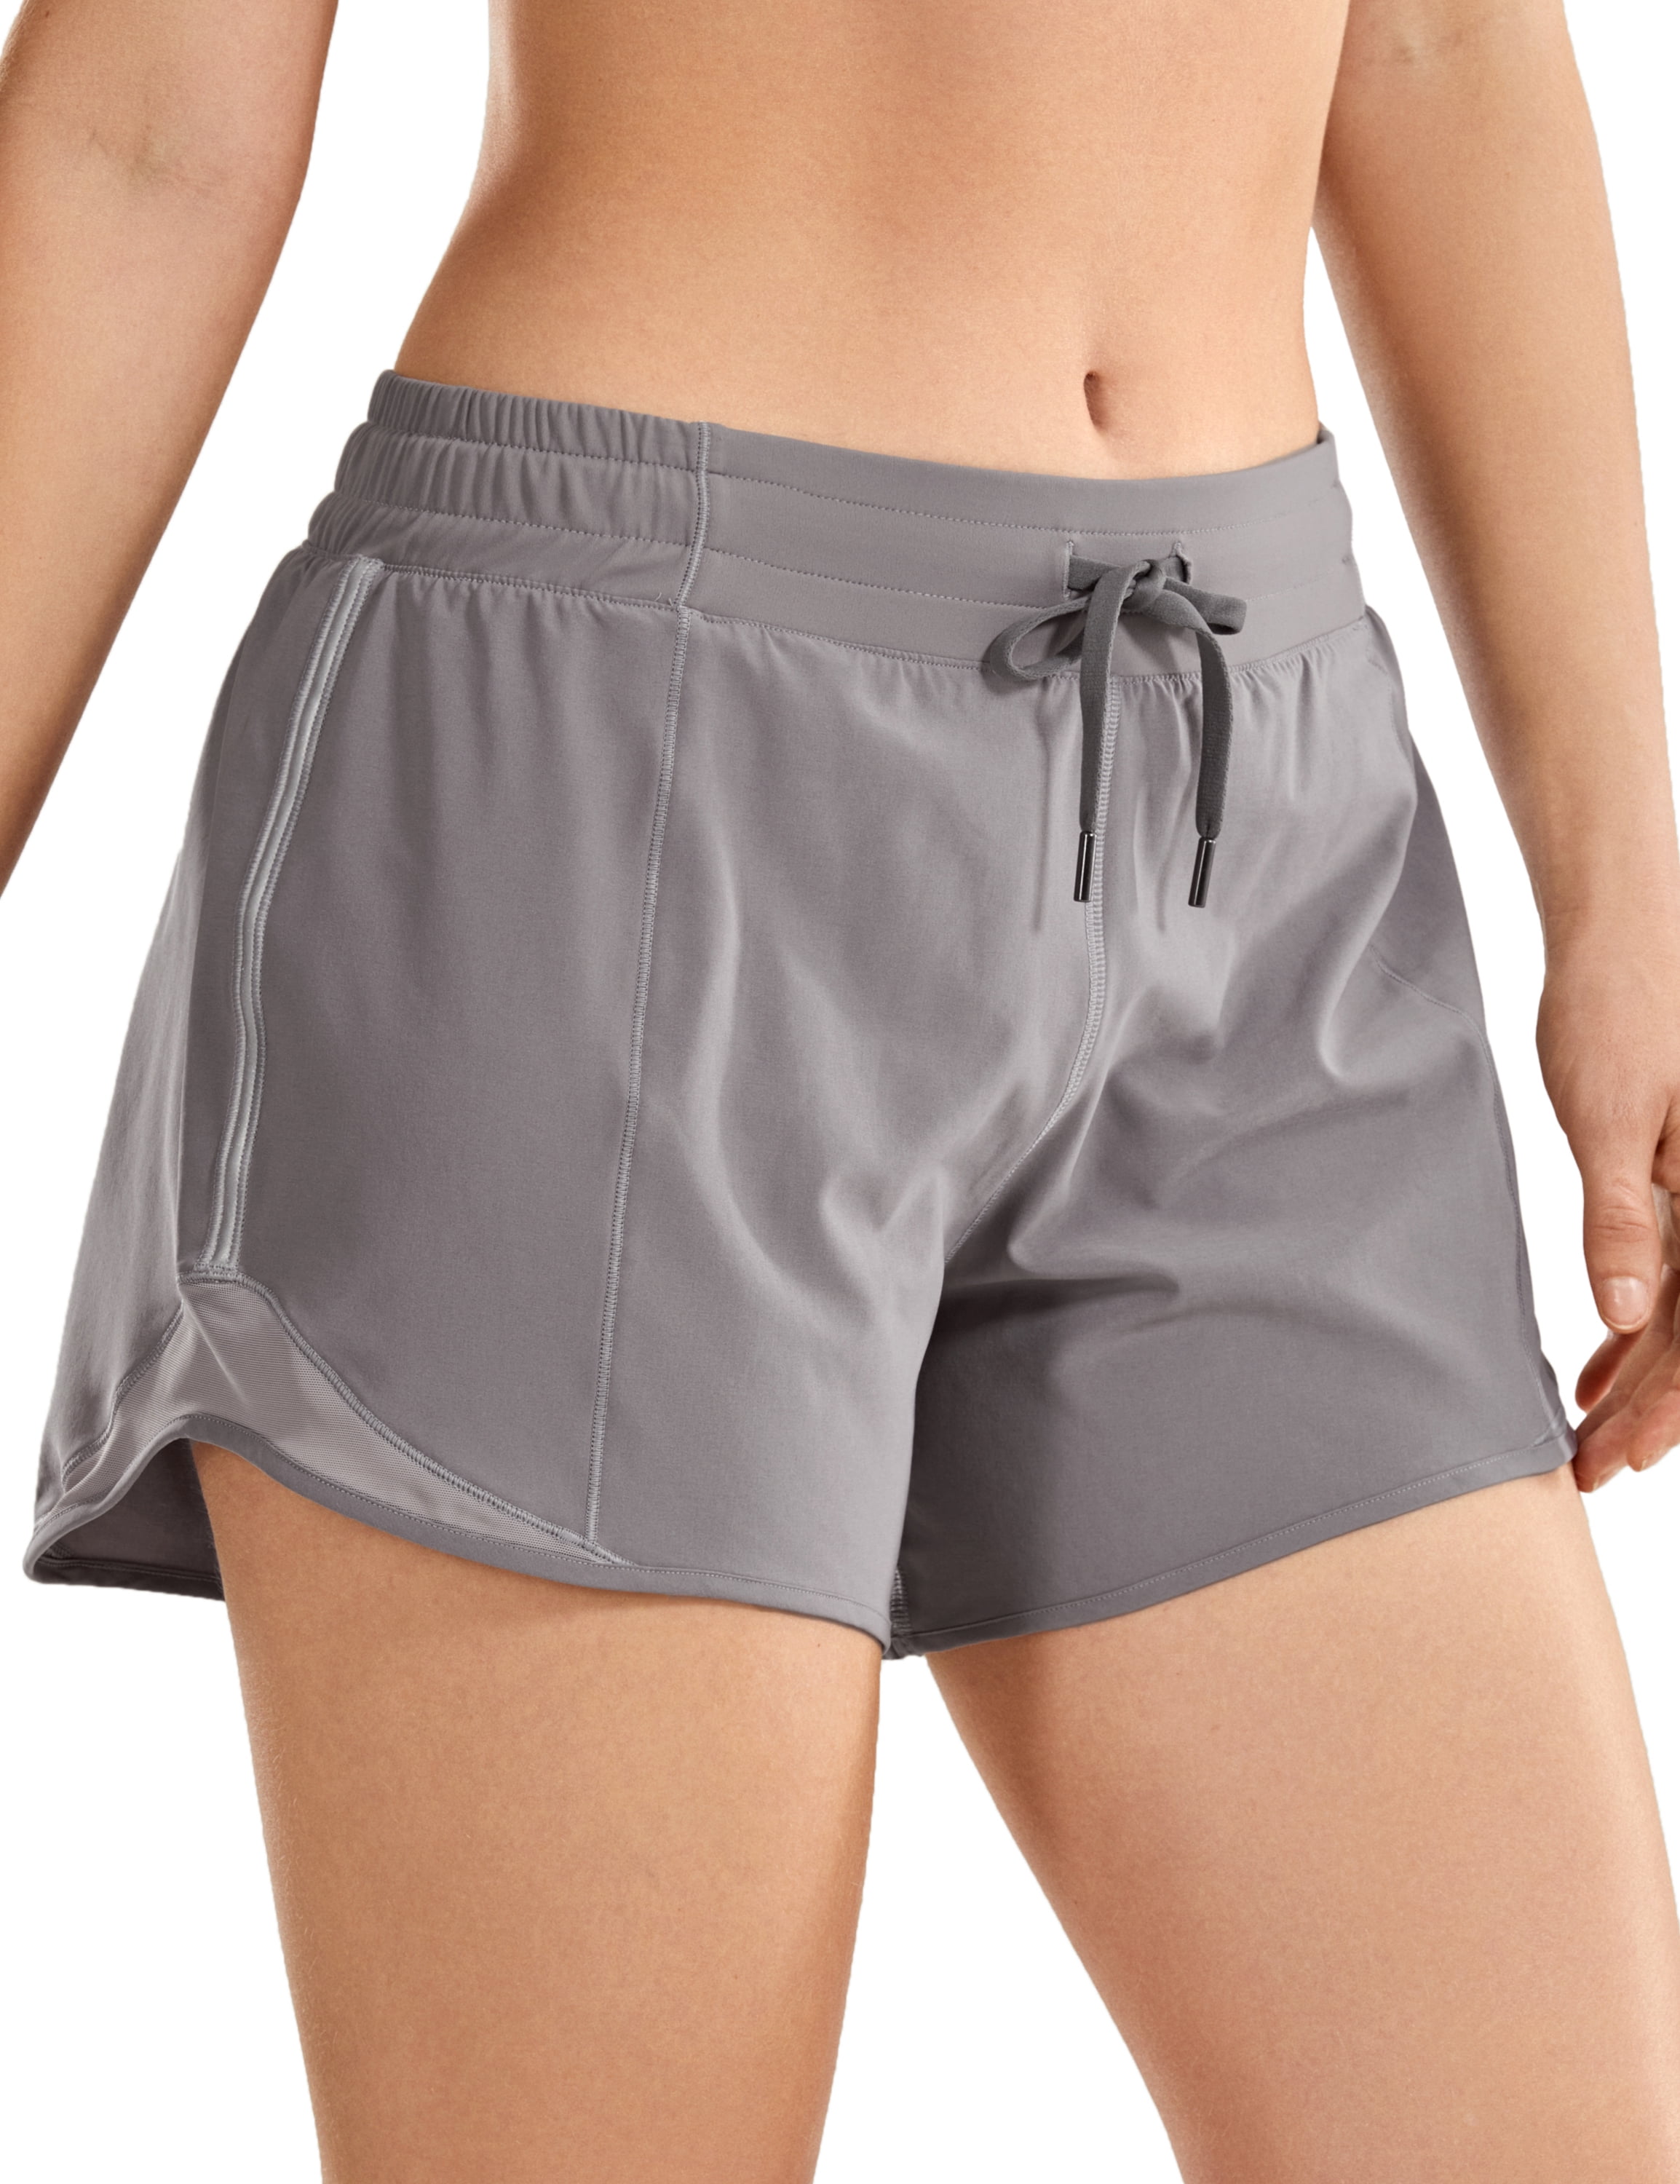 CRZ YOGA Quick-Dry Loose Running Shorts Women Sports Workout Shorts Athletic Shorts with Pocket - Walmart.com